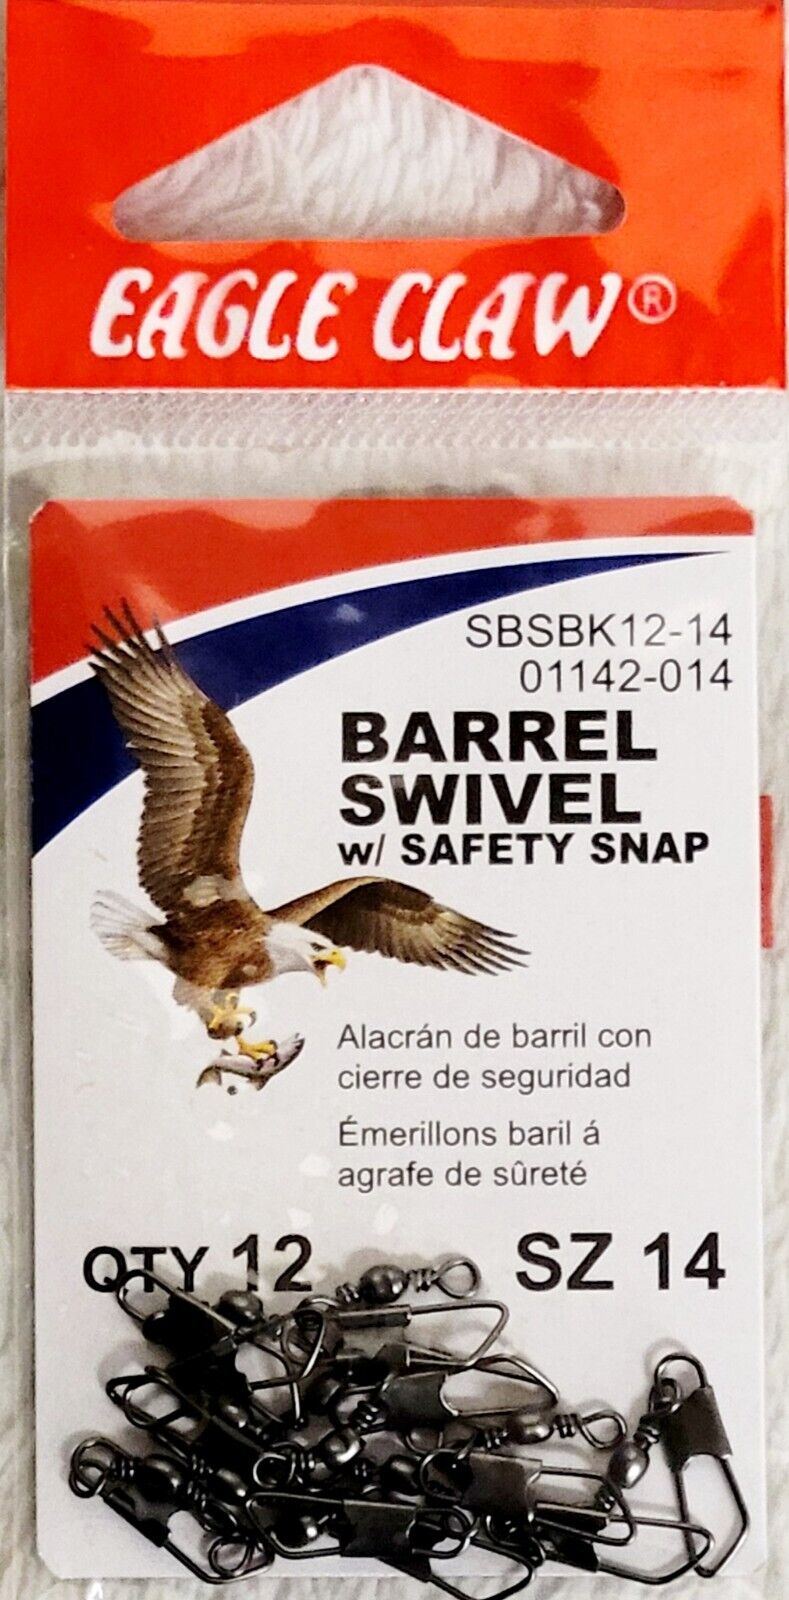 * LOT of 12* Eagle Claw Barrel Swivel w/ Safety Snap SBSBK12-14 01142-014 Size14